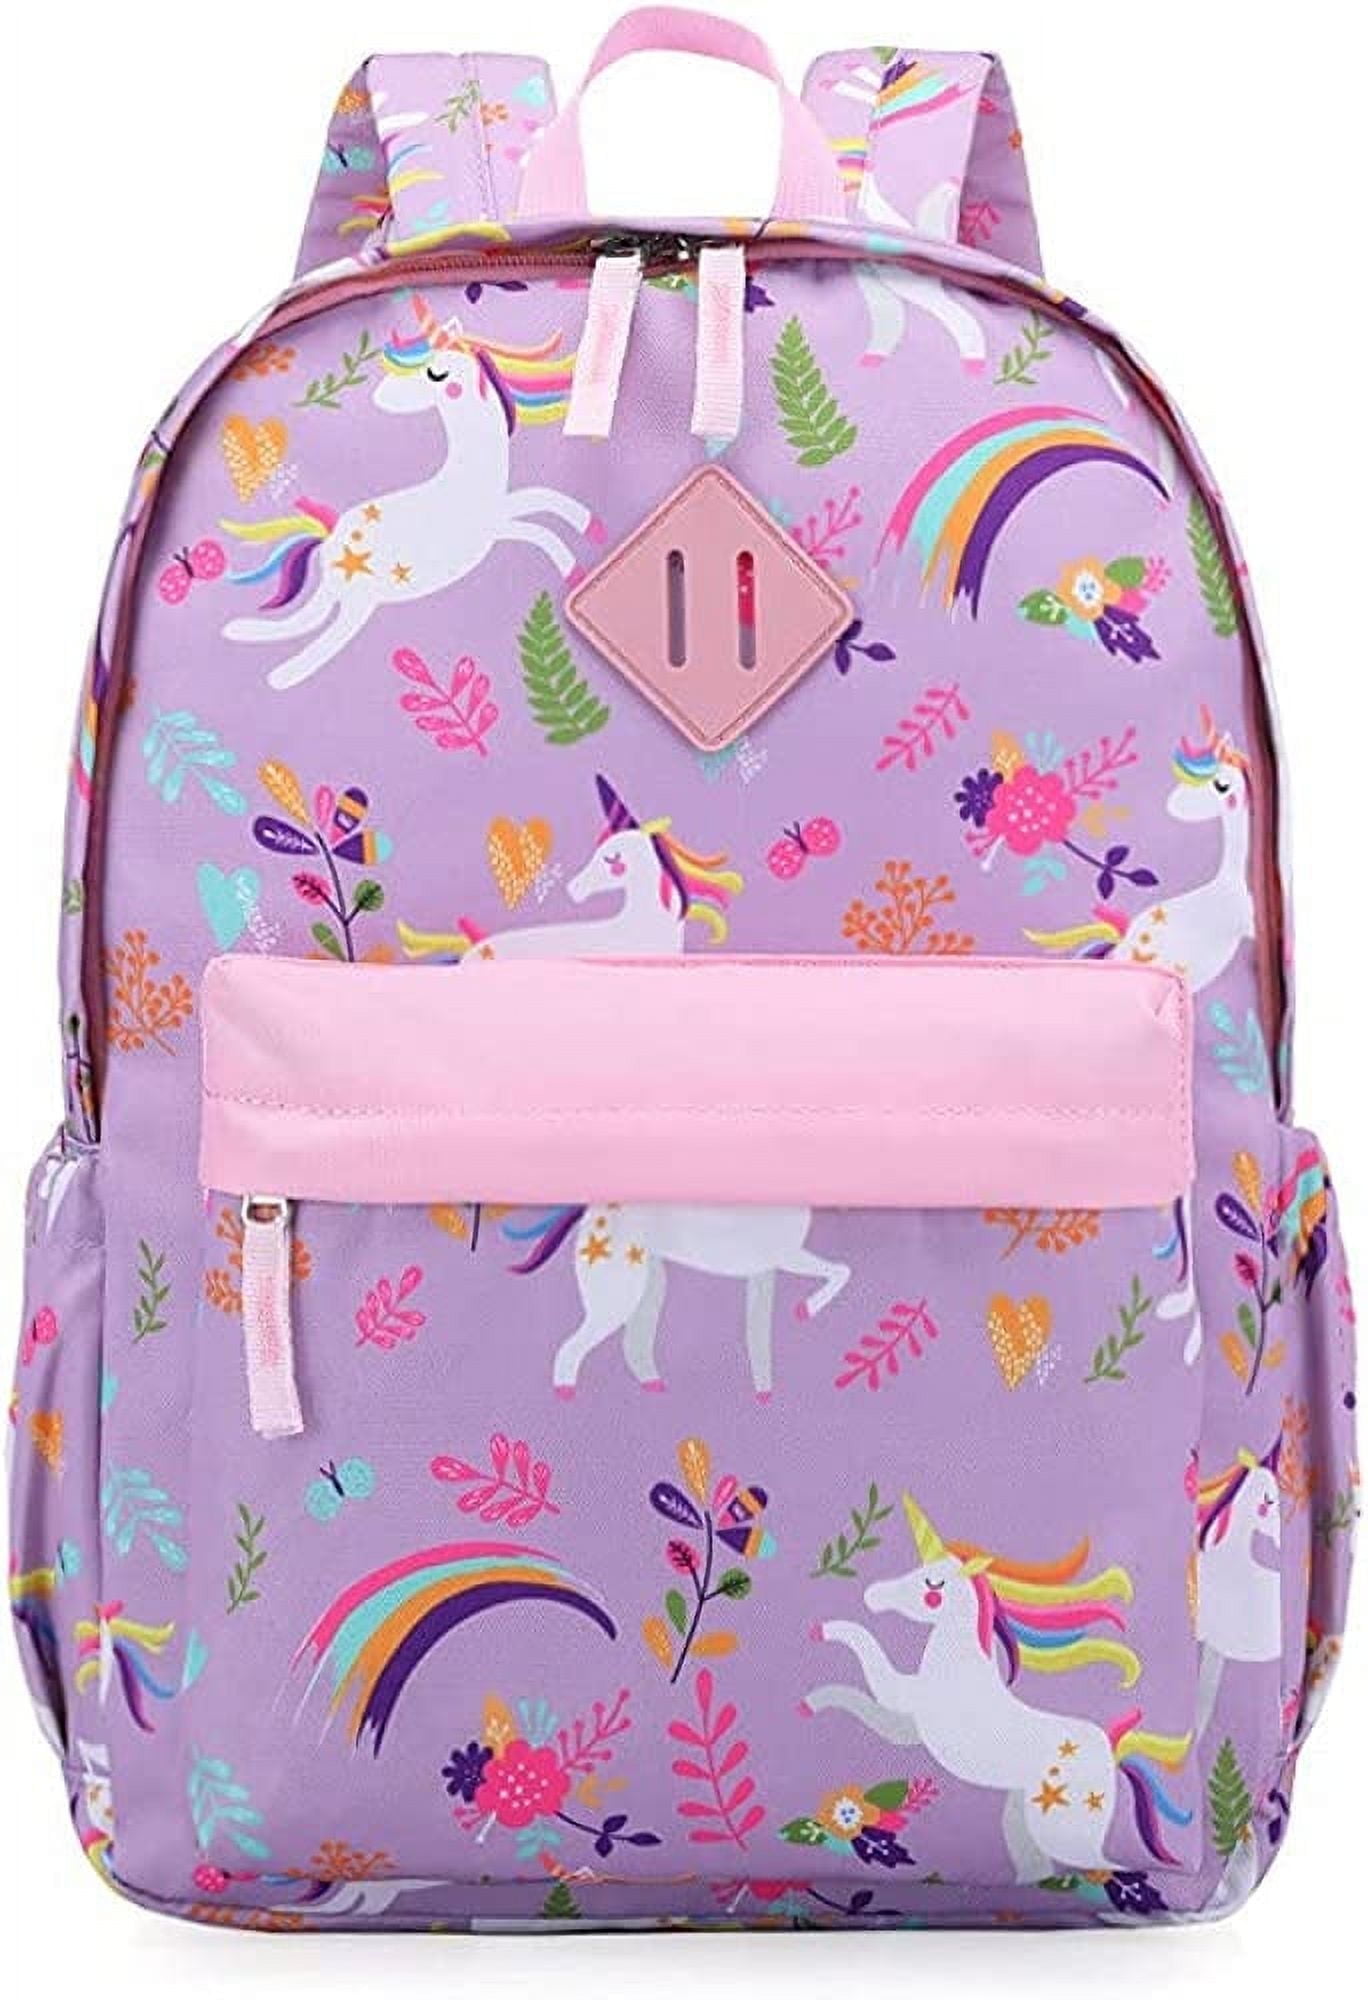 Buy China Wholesale School Bag, Eva 3d Cartoon Unicorn Girls Trolley School  Bags & School Bag, Trolley School Bags $6.35 | Globalsources.com